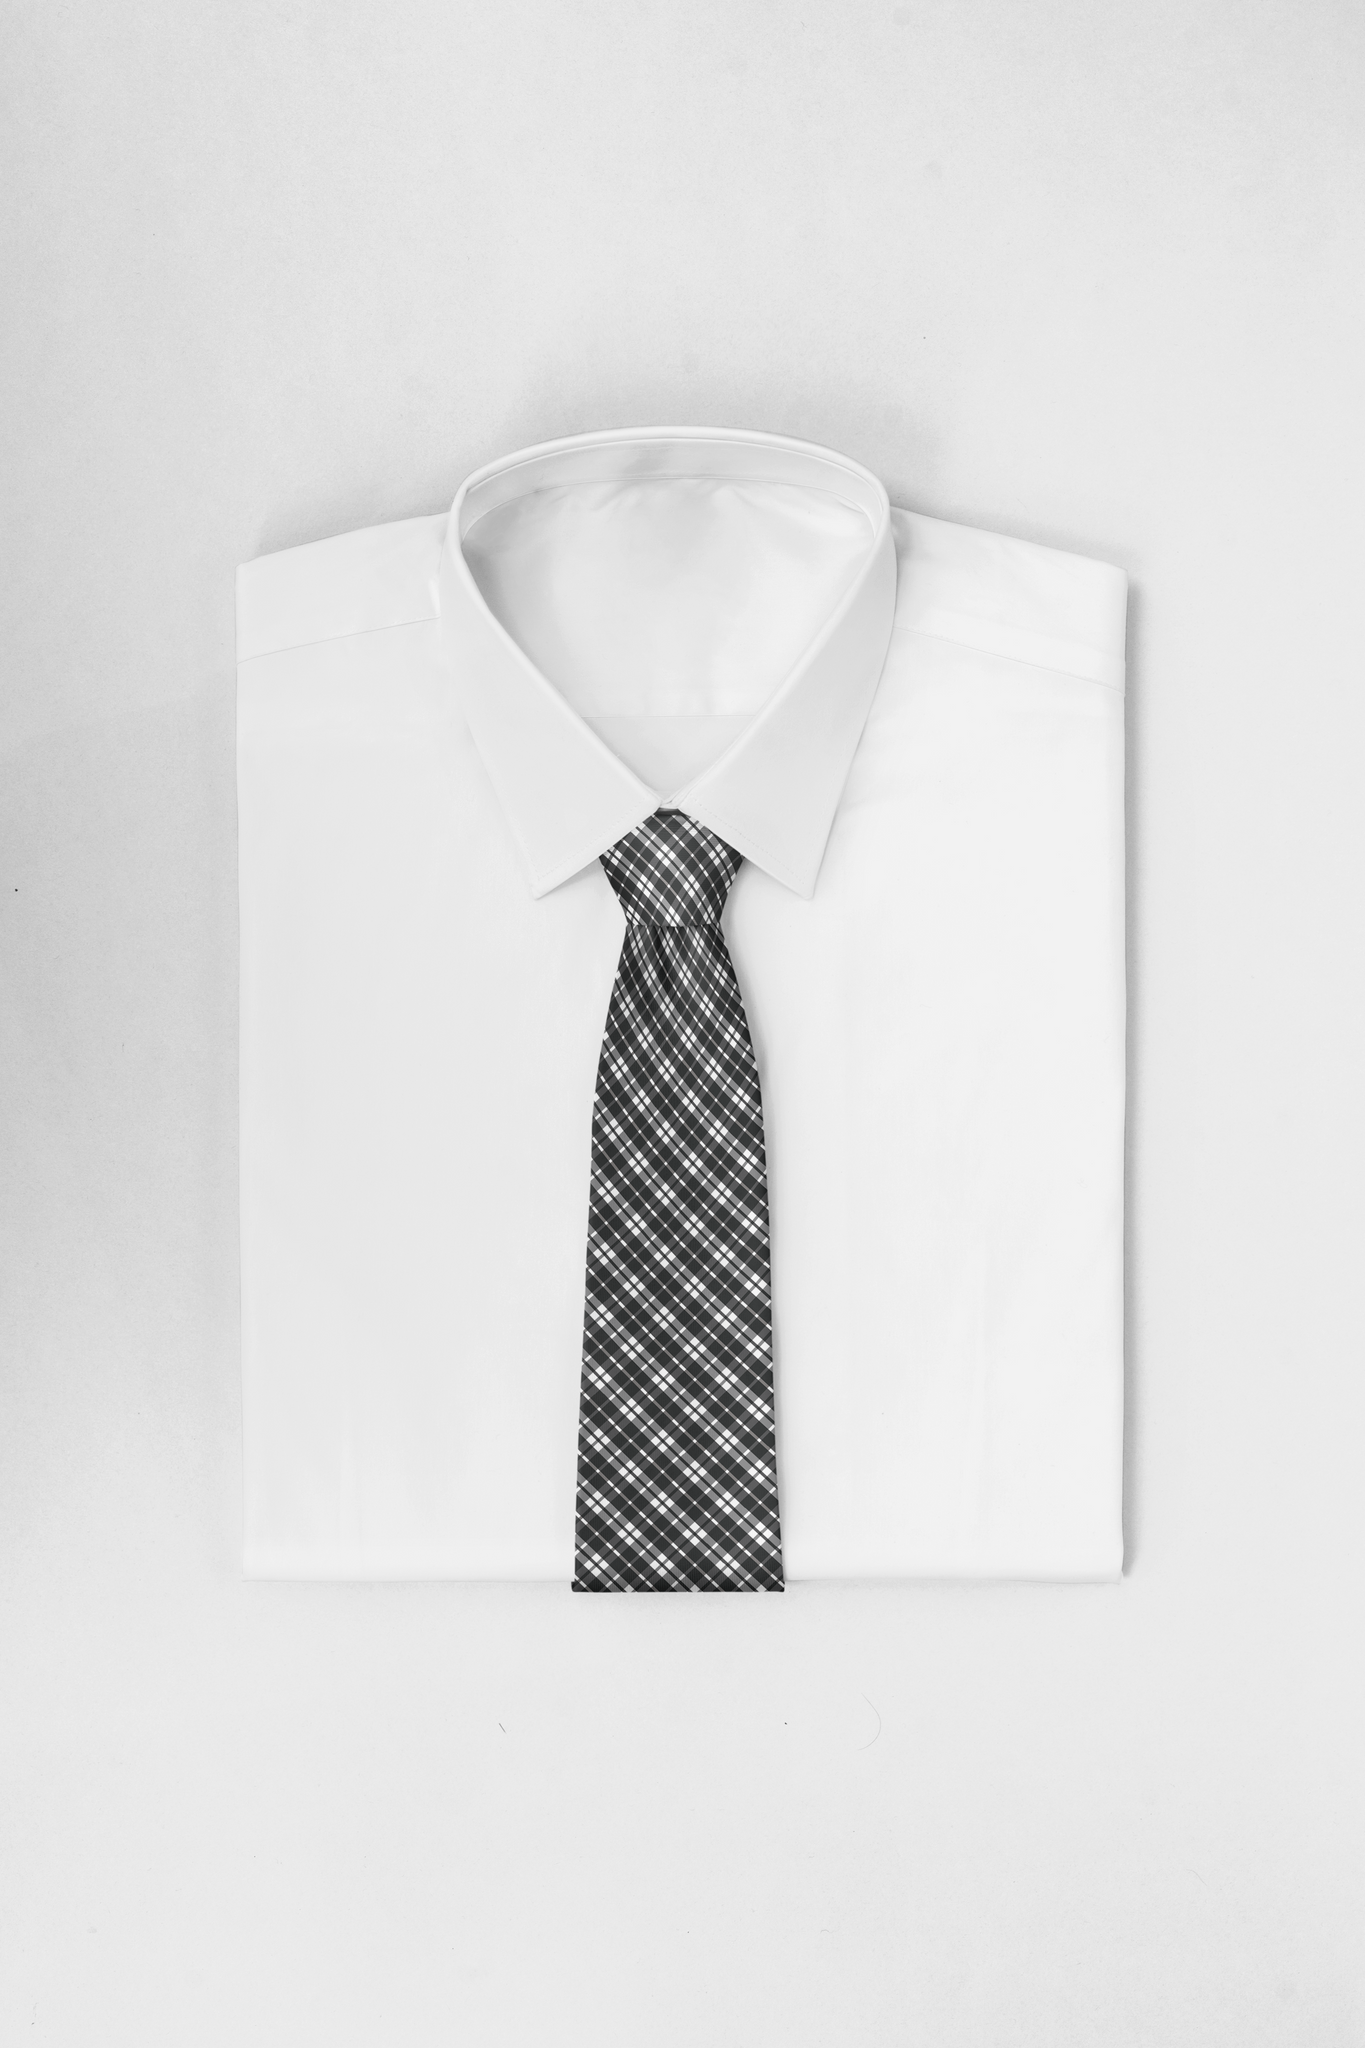 Chokore Black Tartan Plaid Silk Necktie - Plaids Range